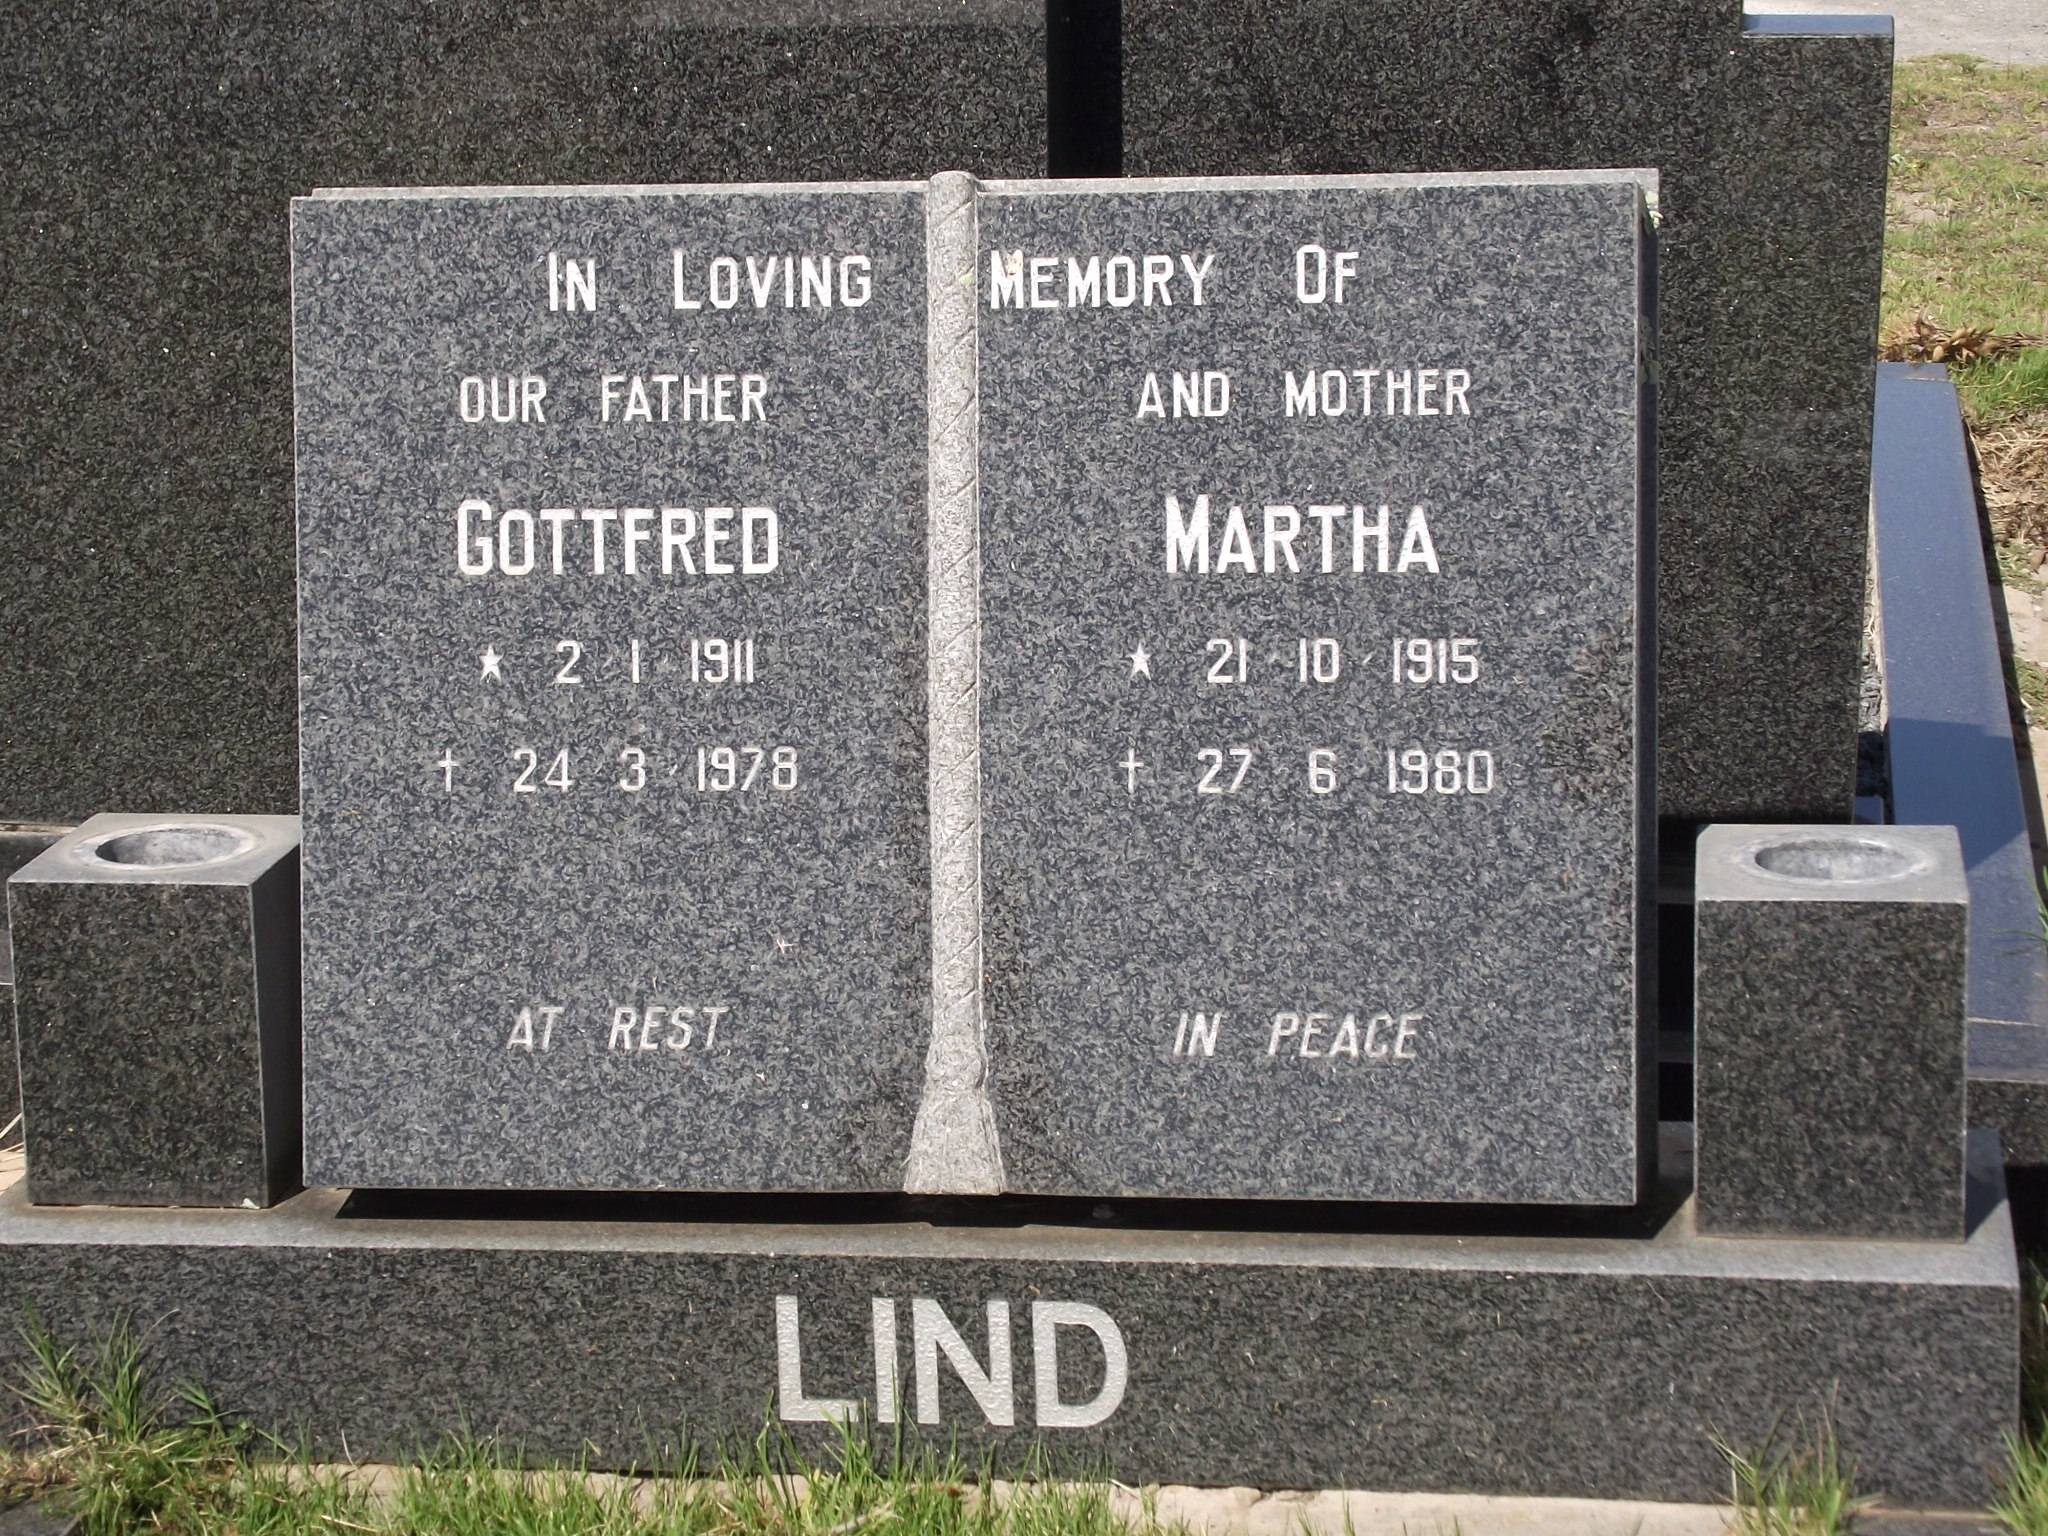 LIND Gottfred 1911-1978 & Martha 1915-1980